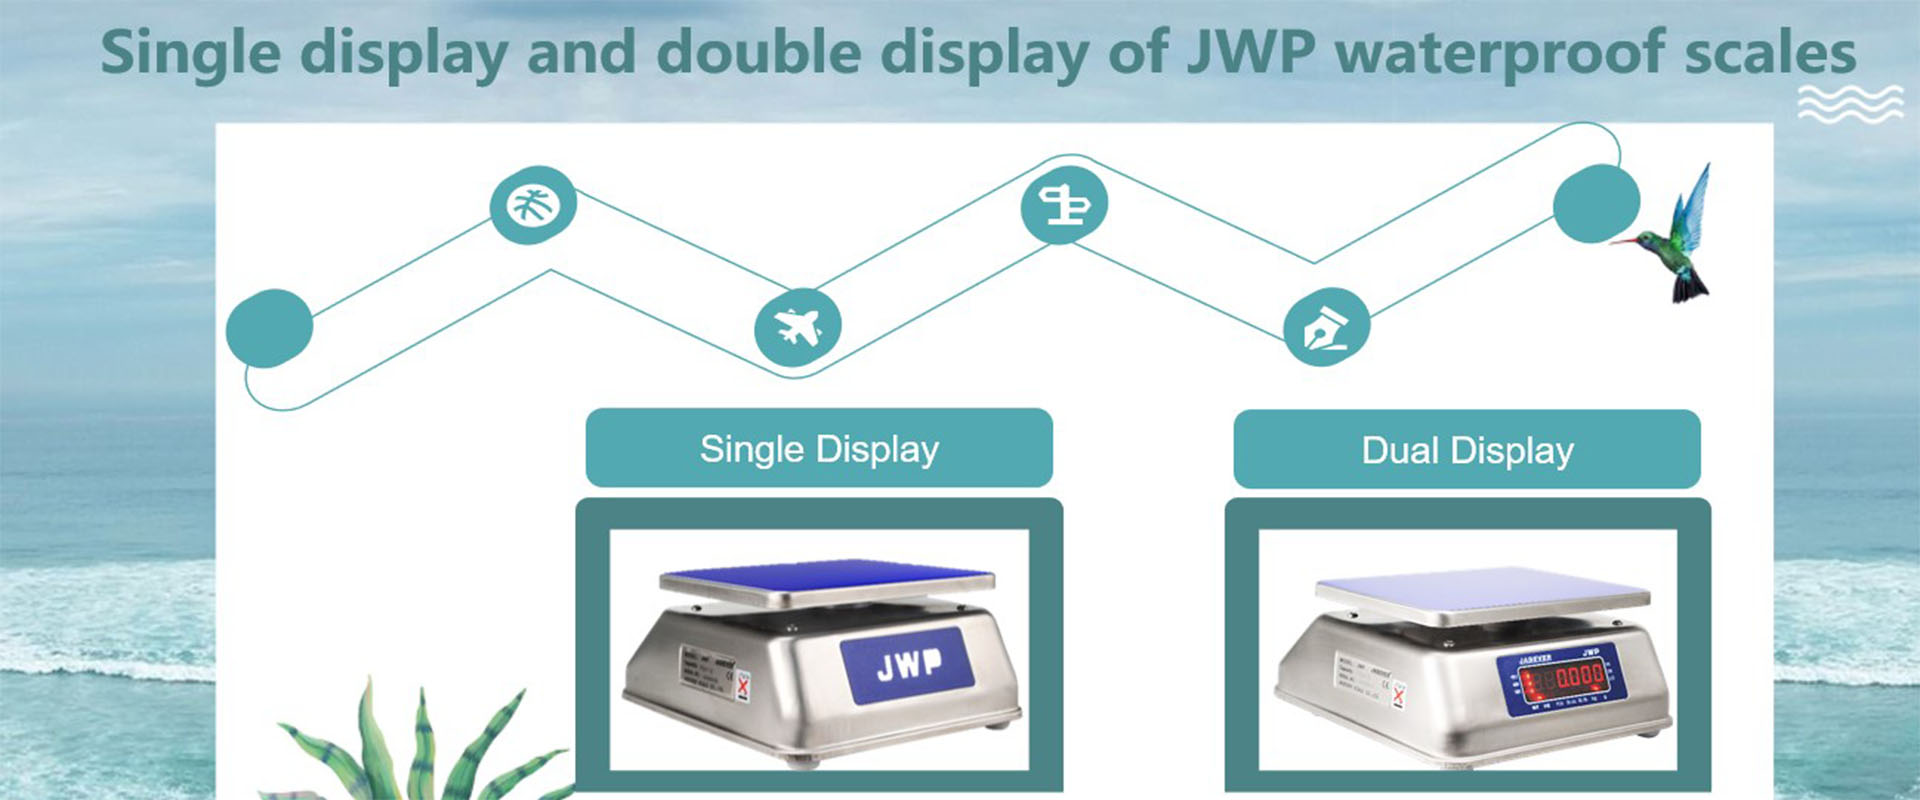 Single display and double display of JWP waterproof scales